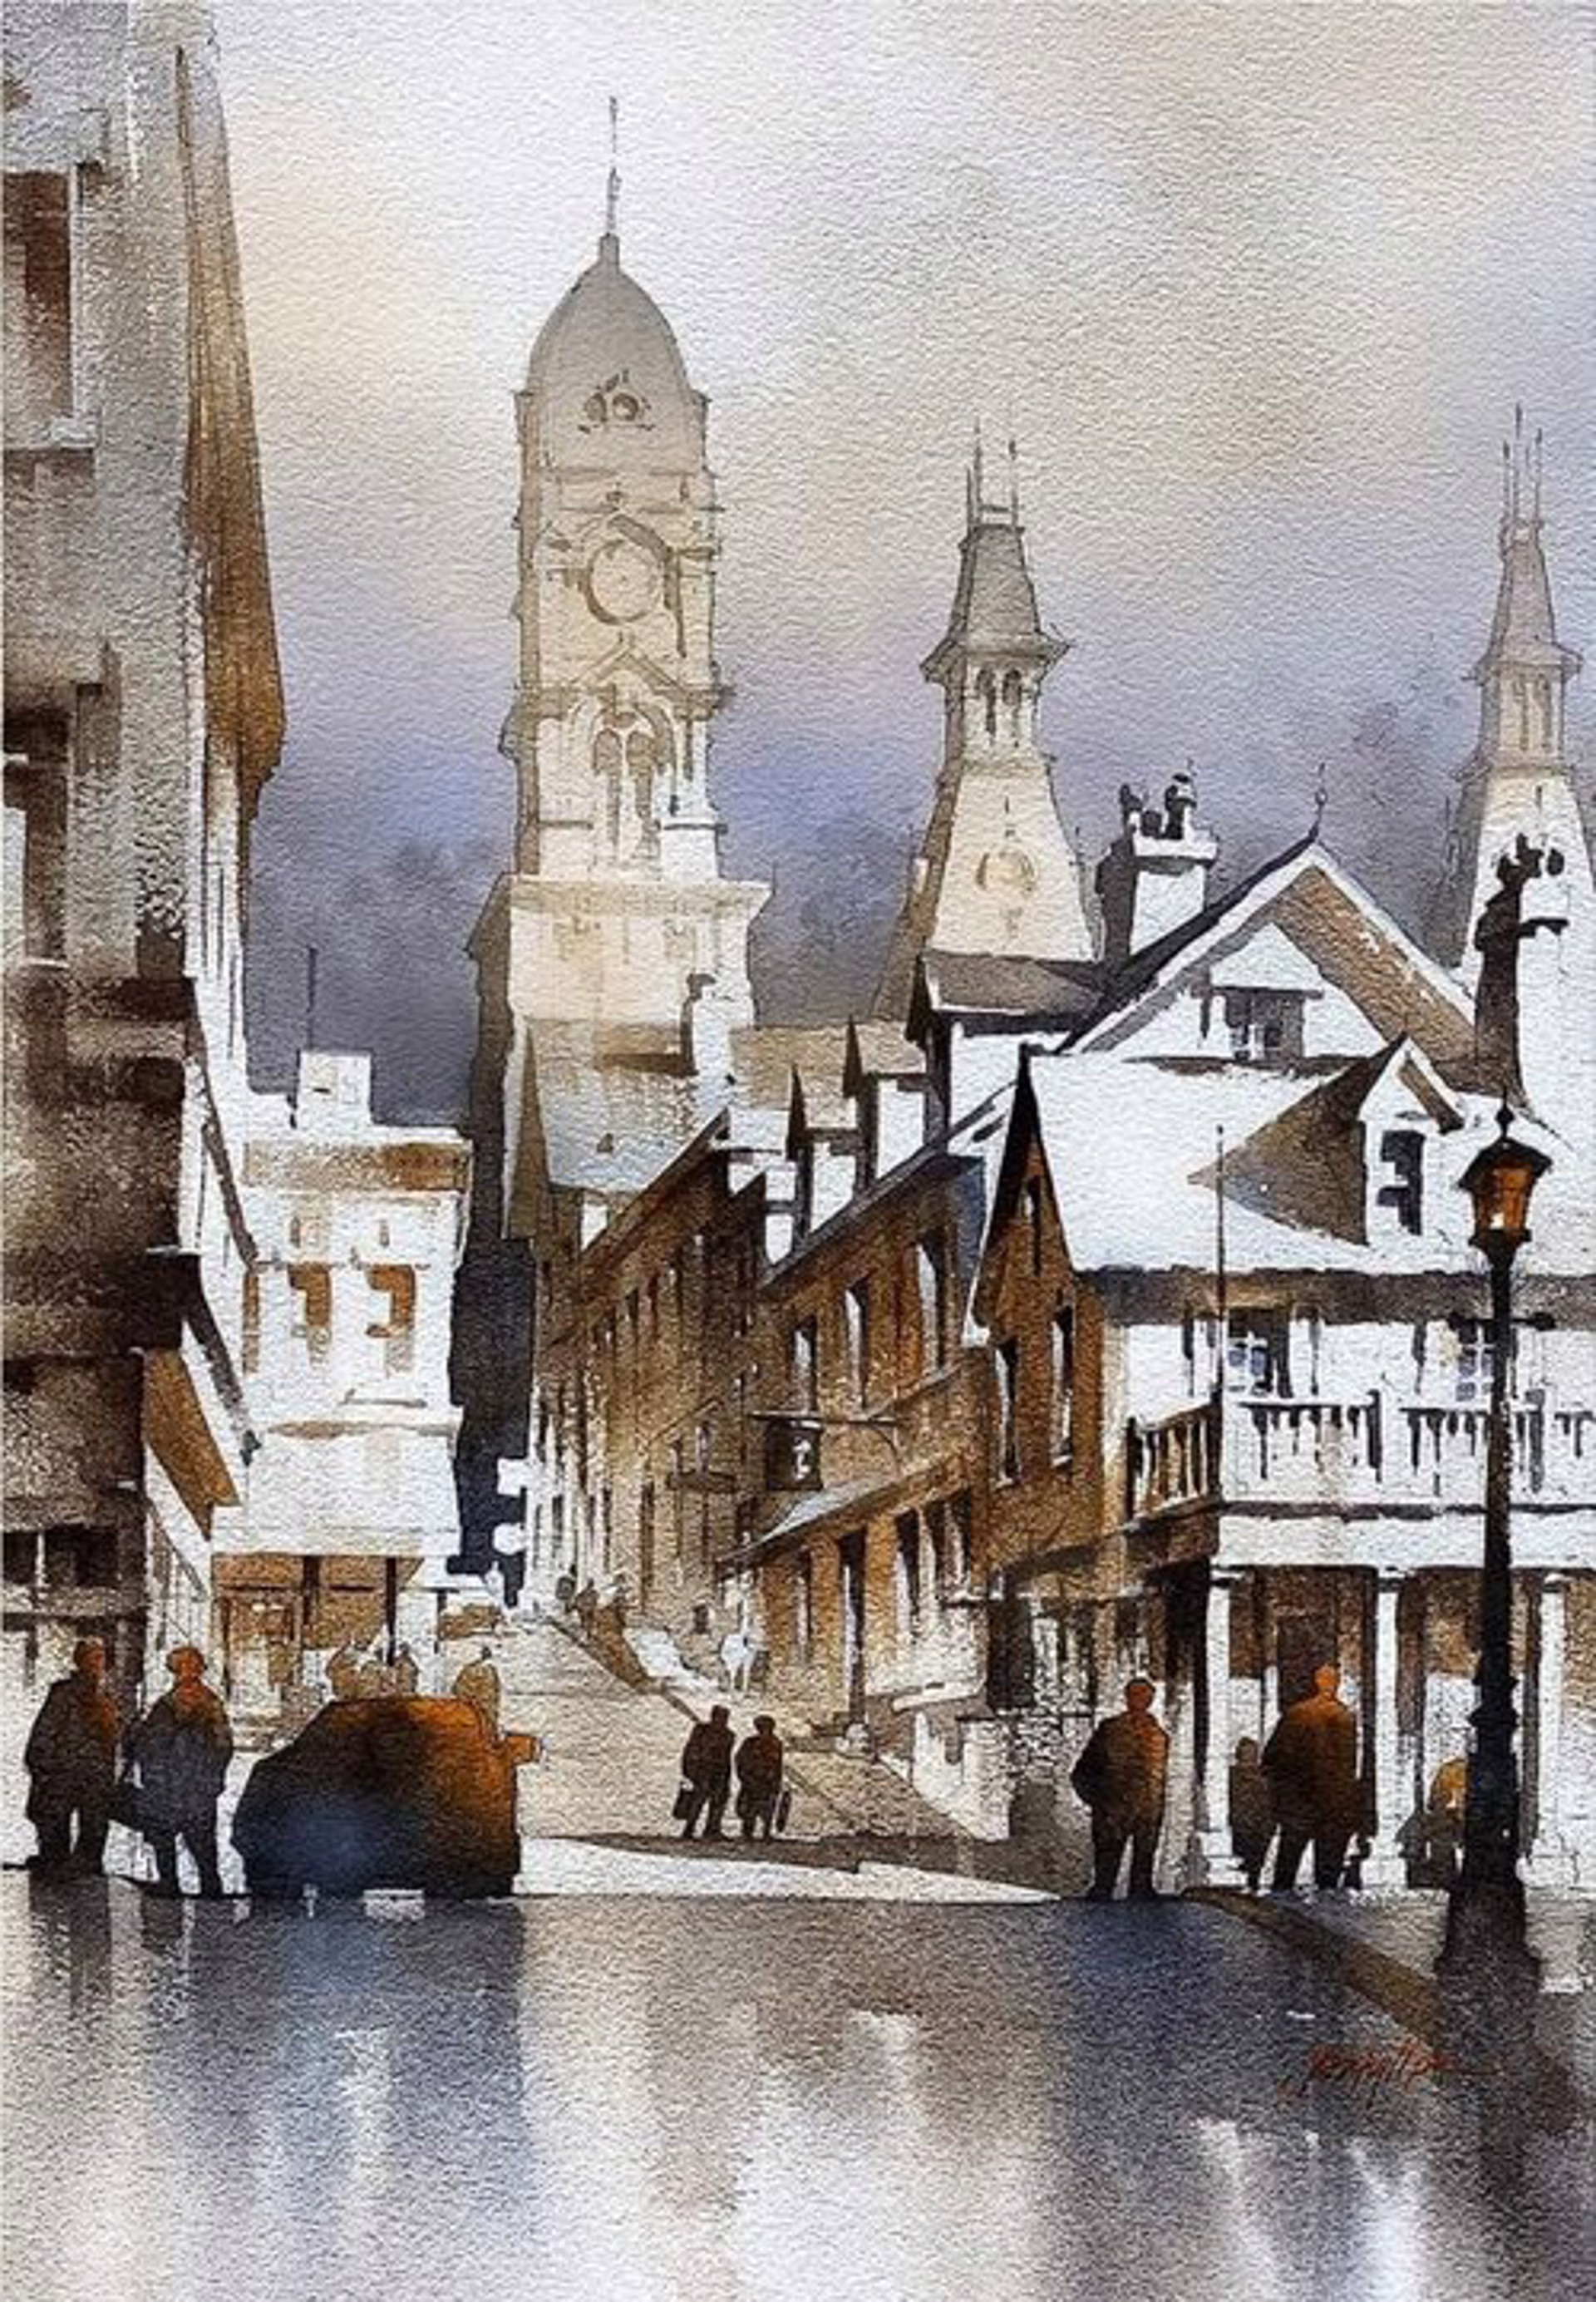 Gloucester by Thomas Schaller